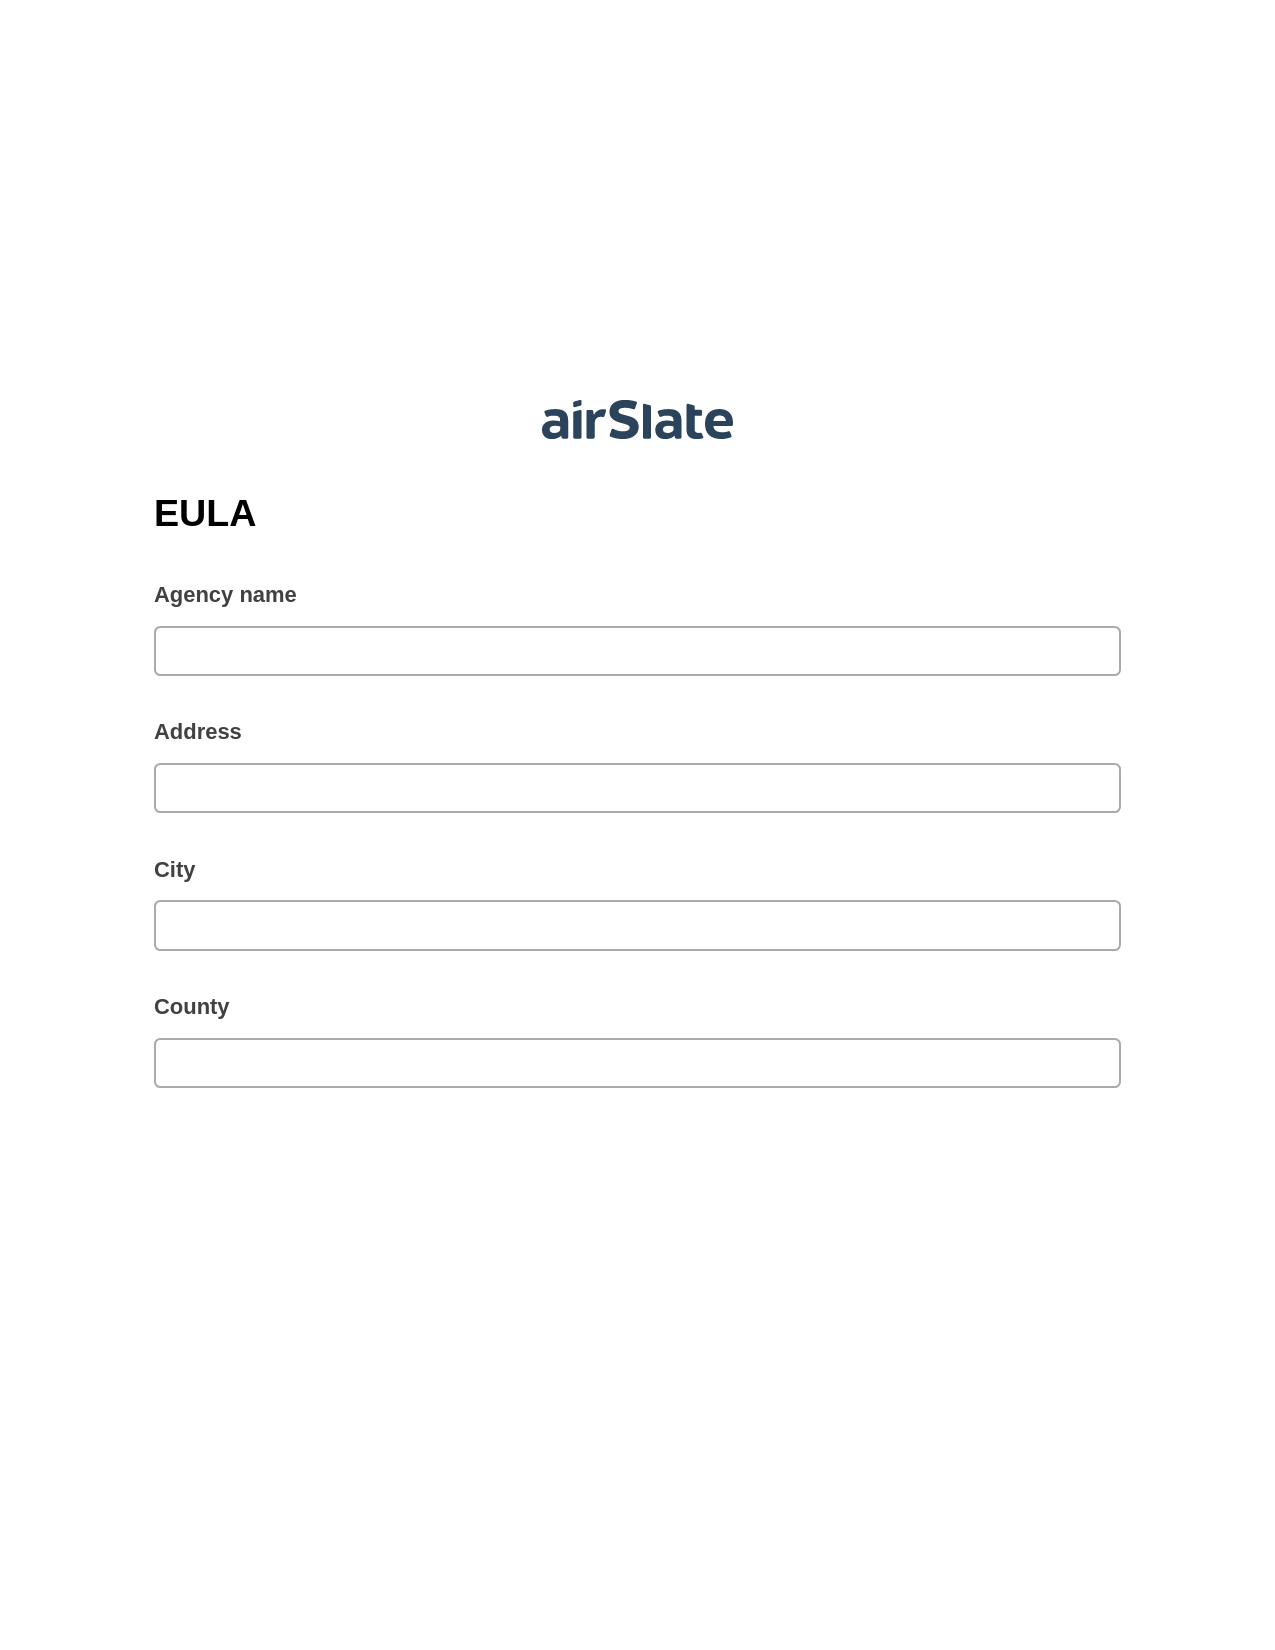 Multirole EULA Pre-fill from CSV File Bot, Update NetSuite Records Bot, Slack Two-Way Binding Bot